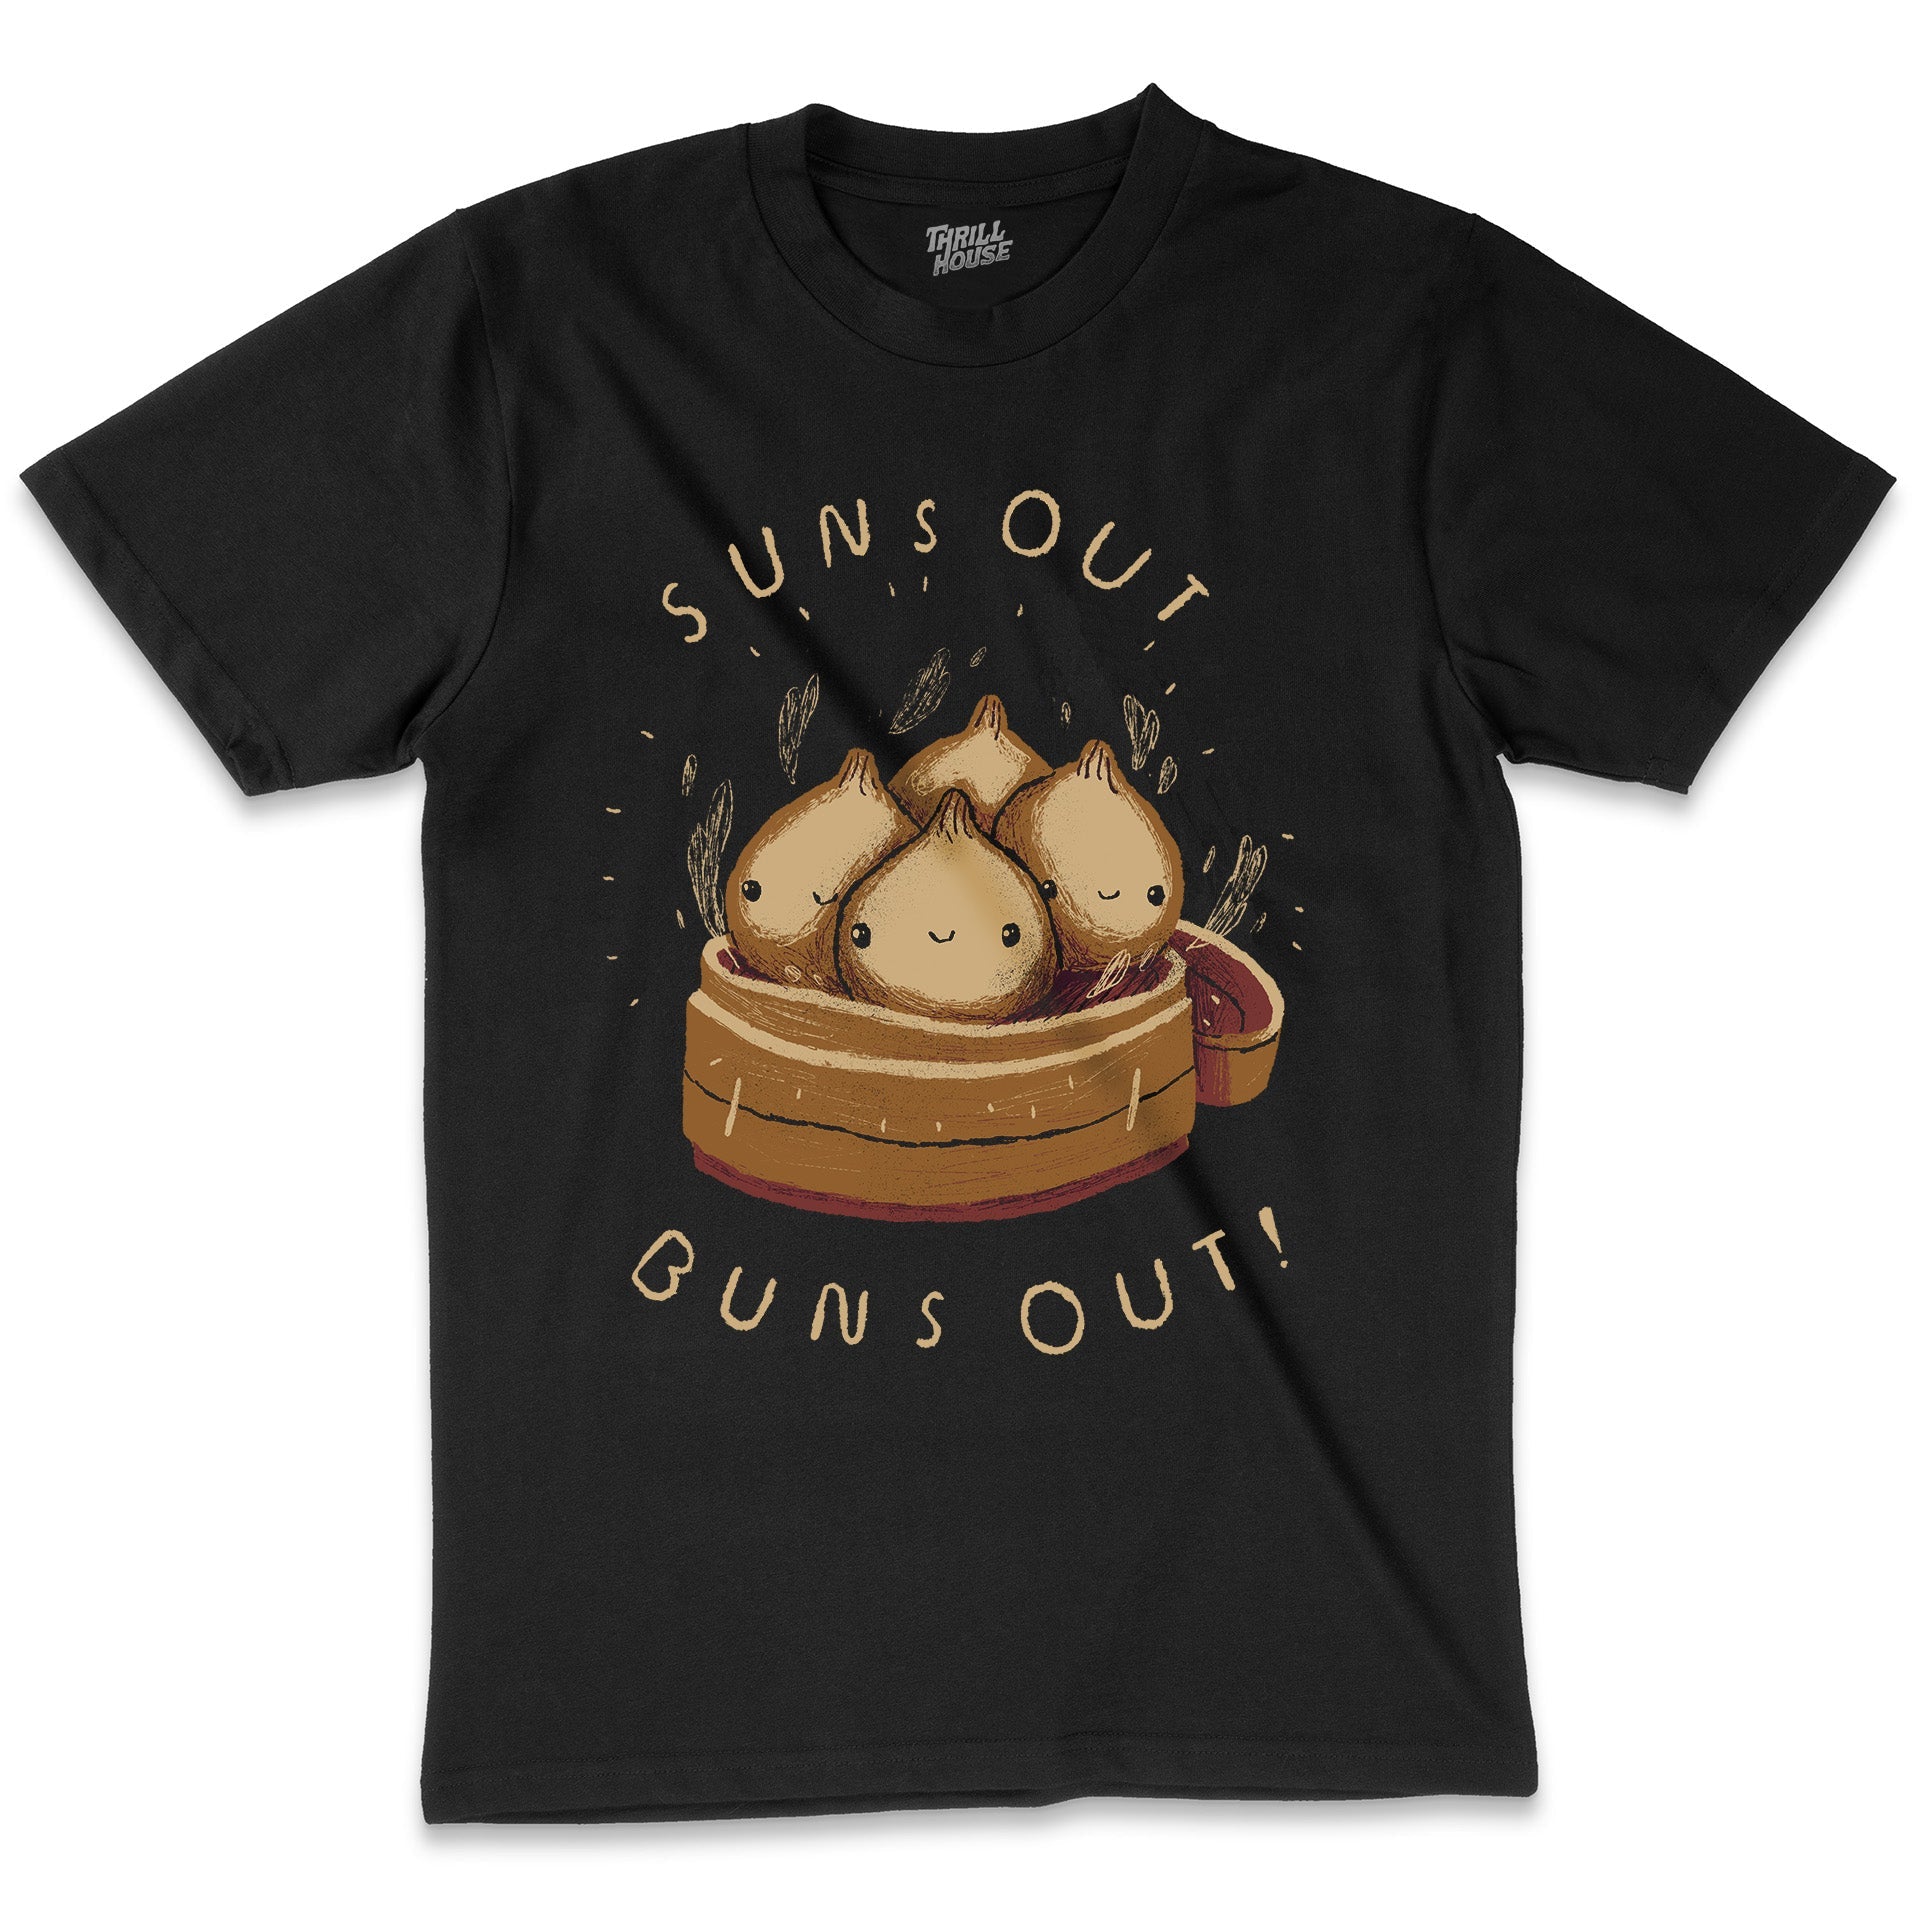 Suns Out Buns Out Dumpling Foodie Pun Dim Sum Yum Cha Chinese Food Slogan Cotton T-Shirt